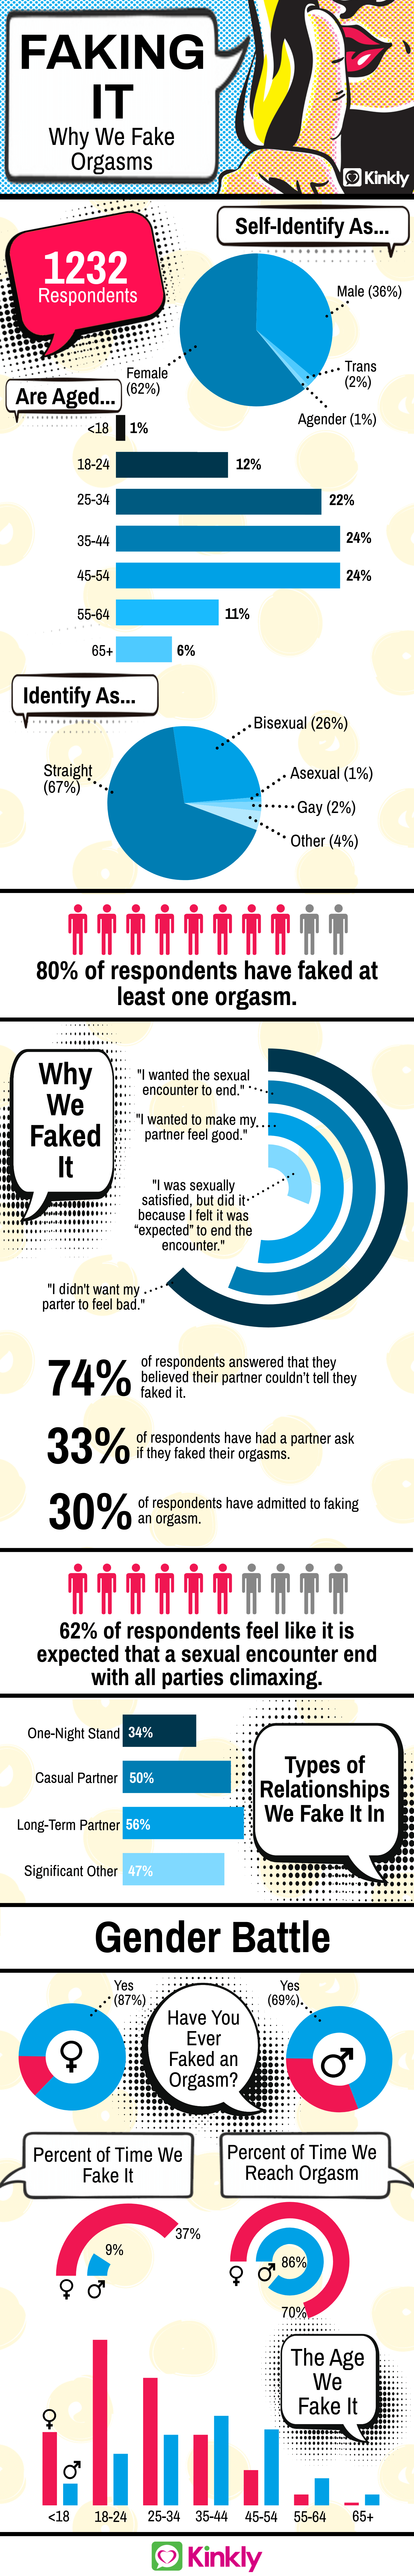 Why We Fake Orgasms